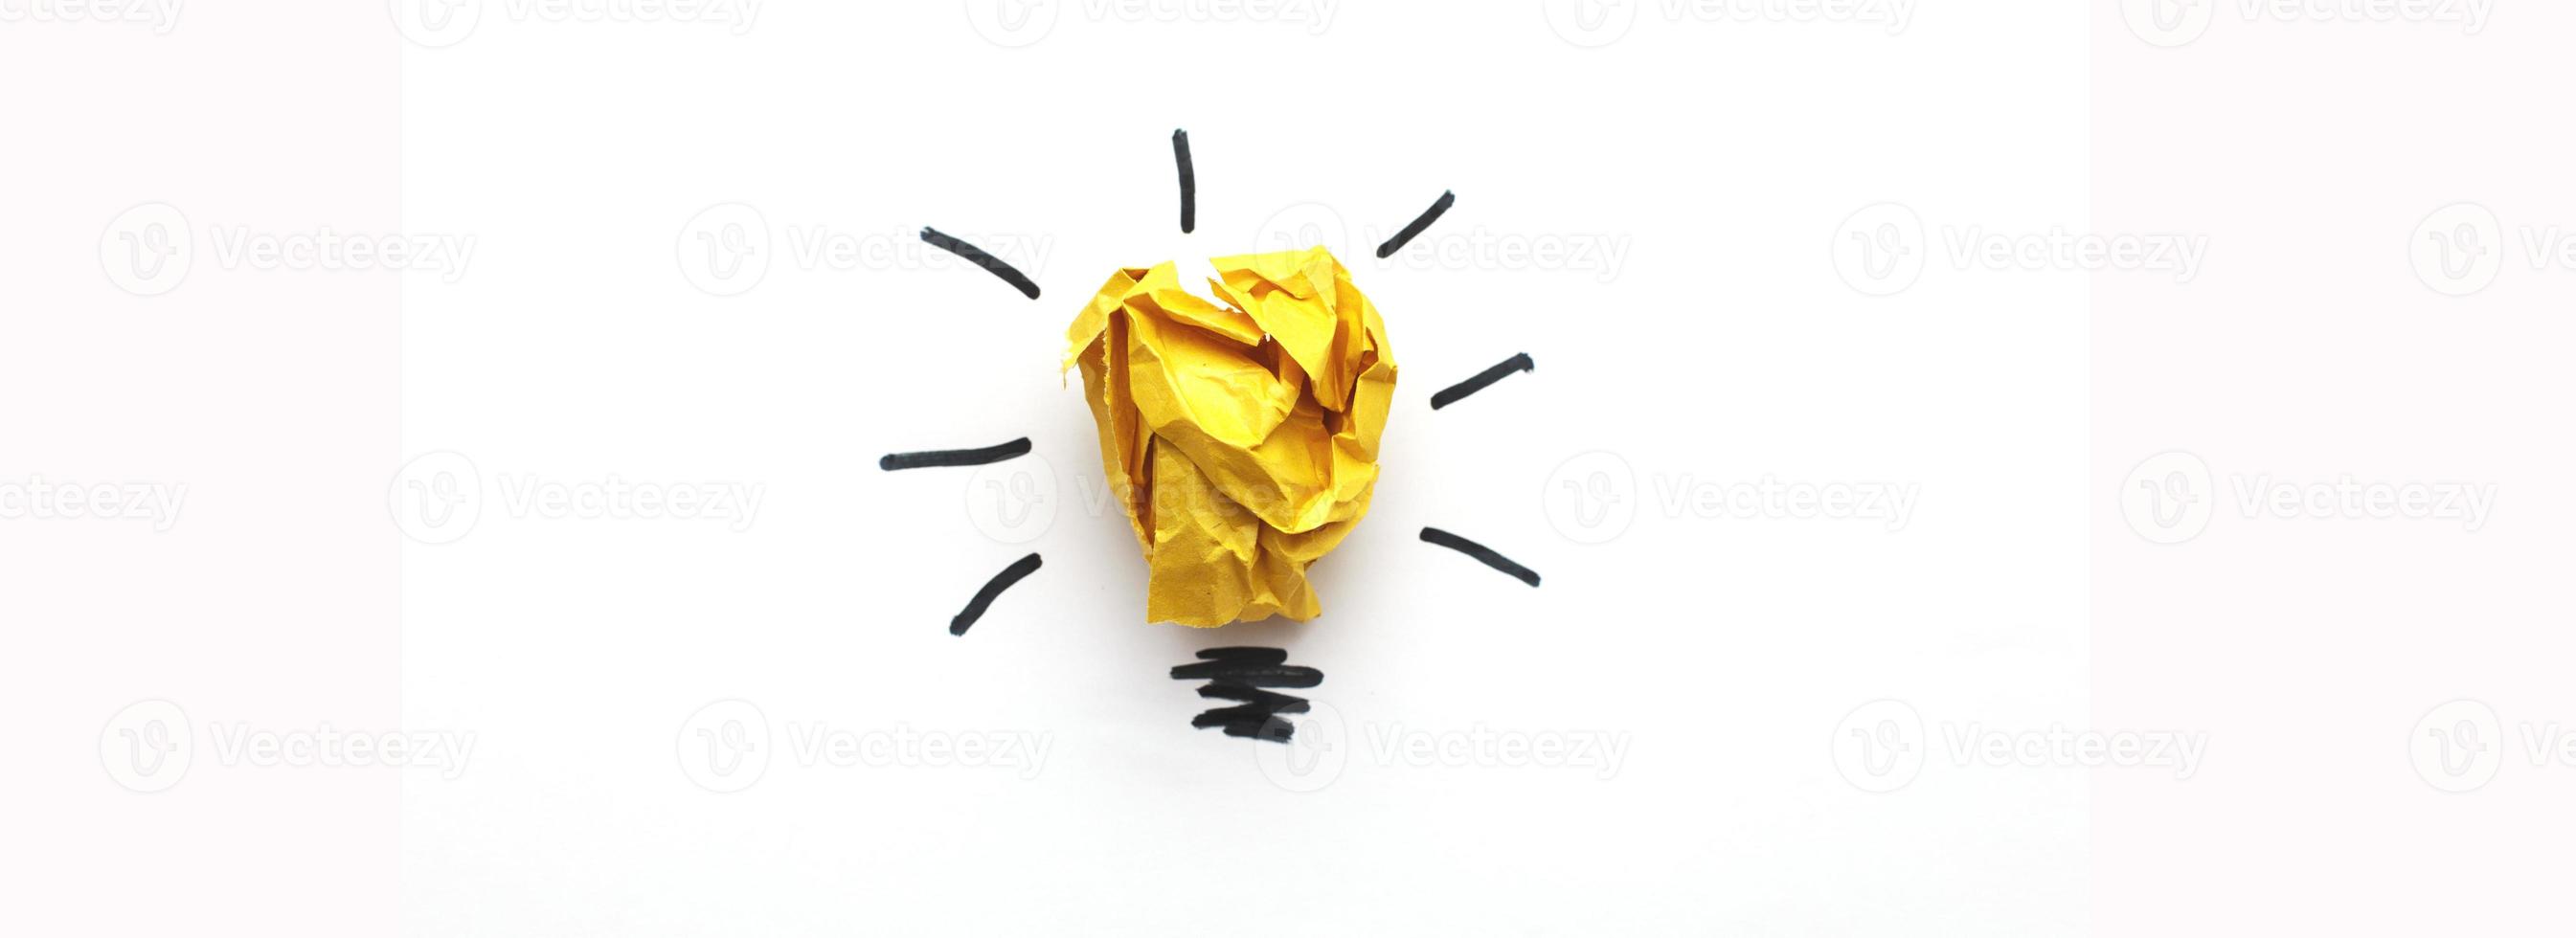 bombilla de papel amarillo arrugado como concepto de idea creativa e innovación. bandera foto